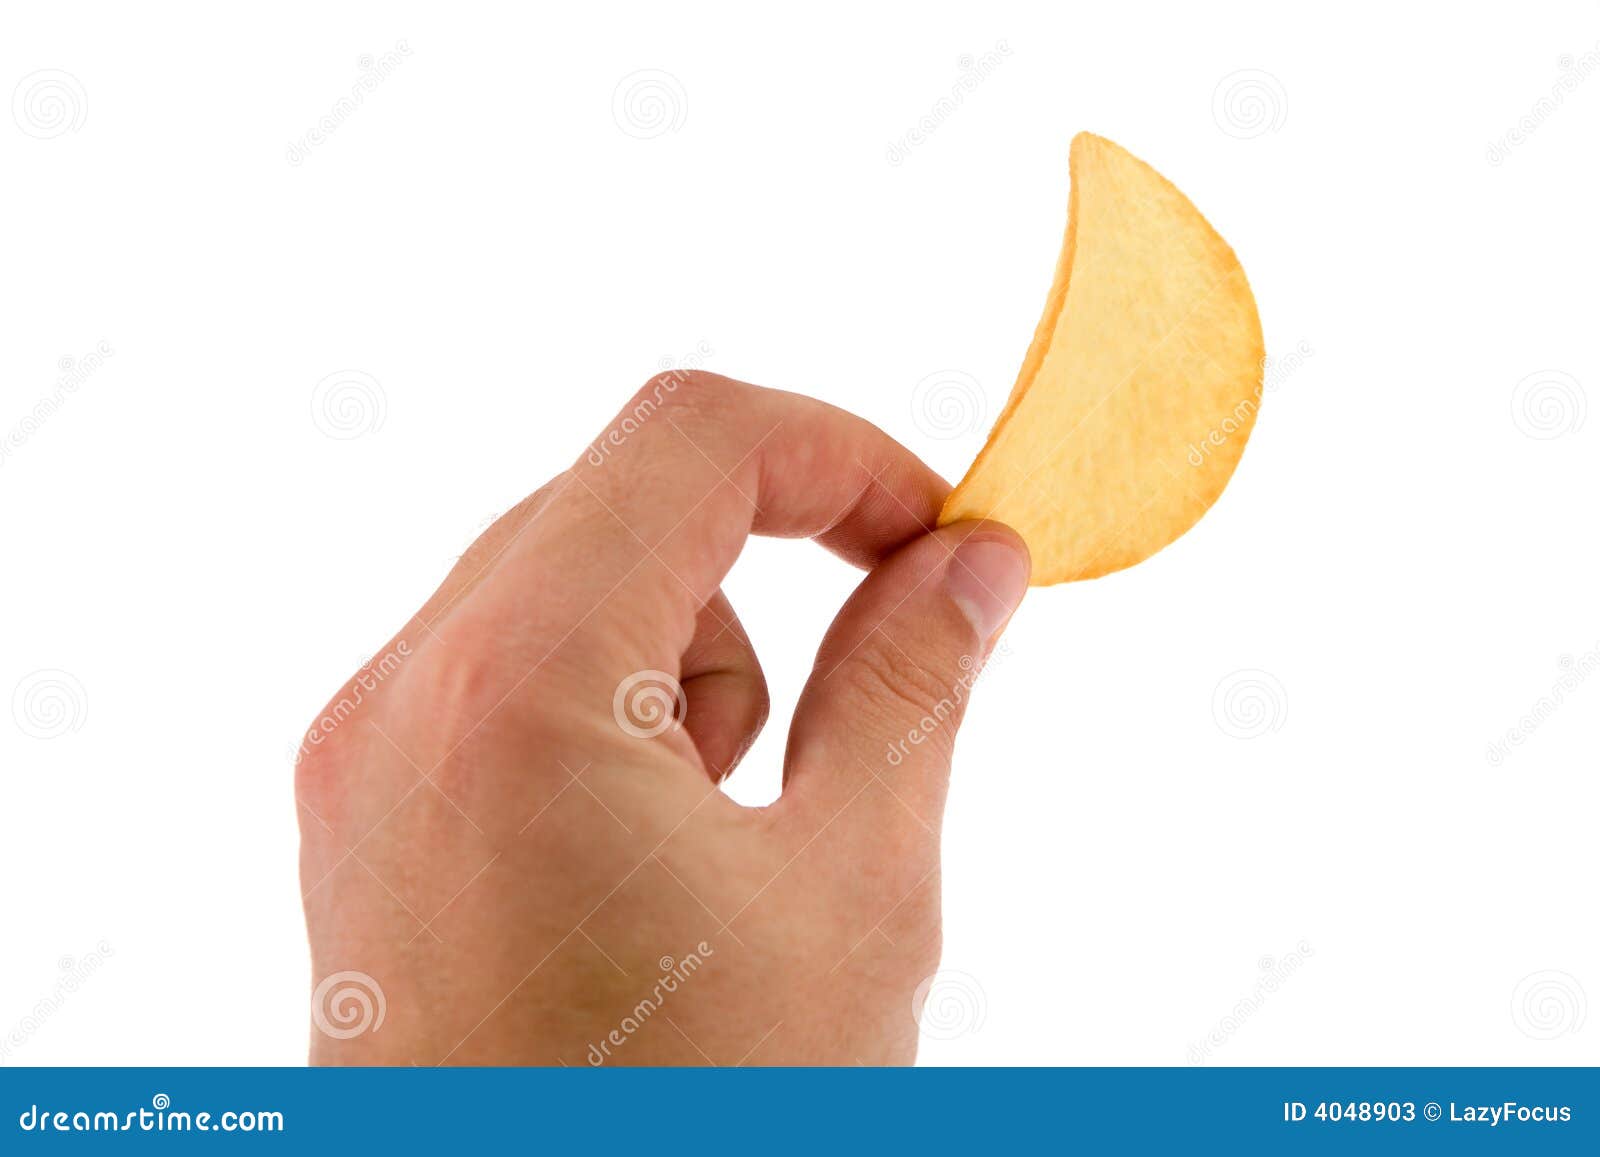 hand-holding-potato-chip-4048903.jpg